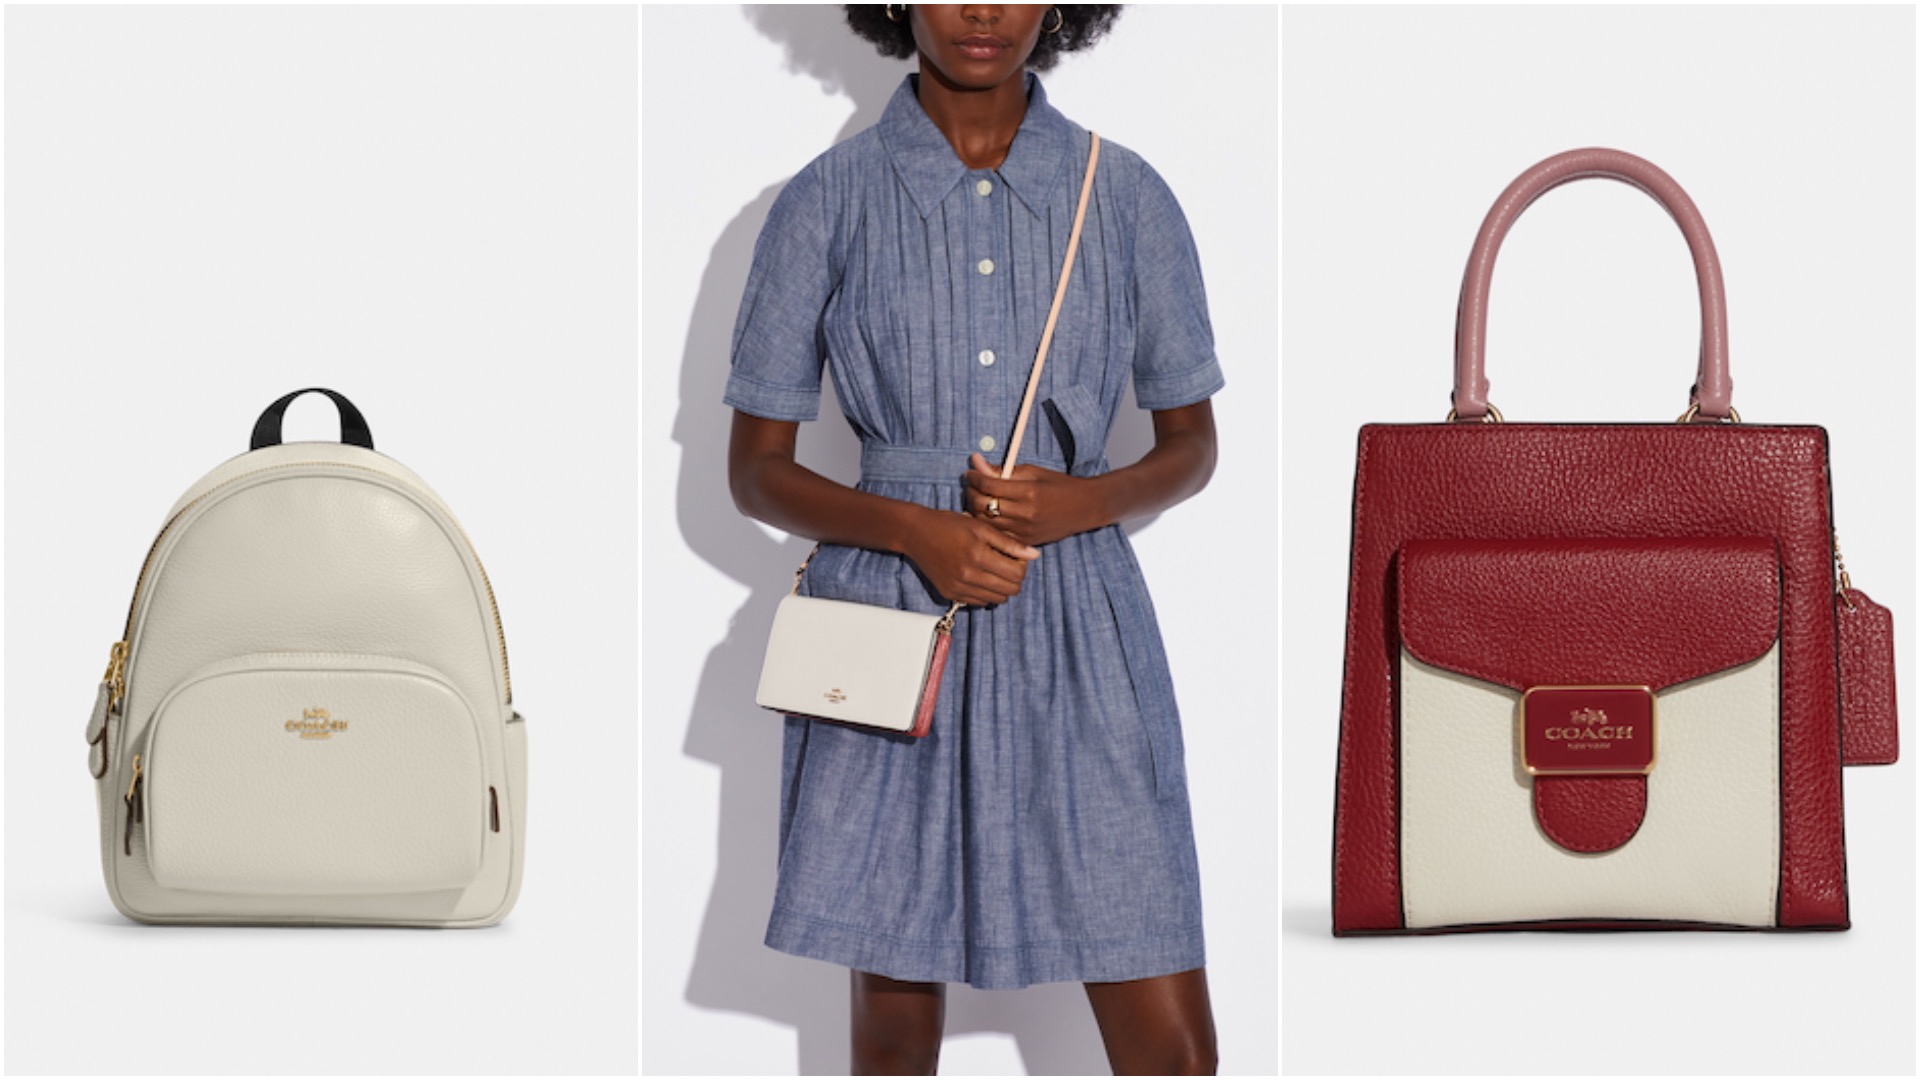 Coach Outlet sale: 70 percent off handbags, accessories, apparel